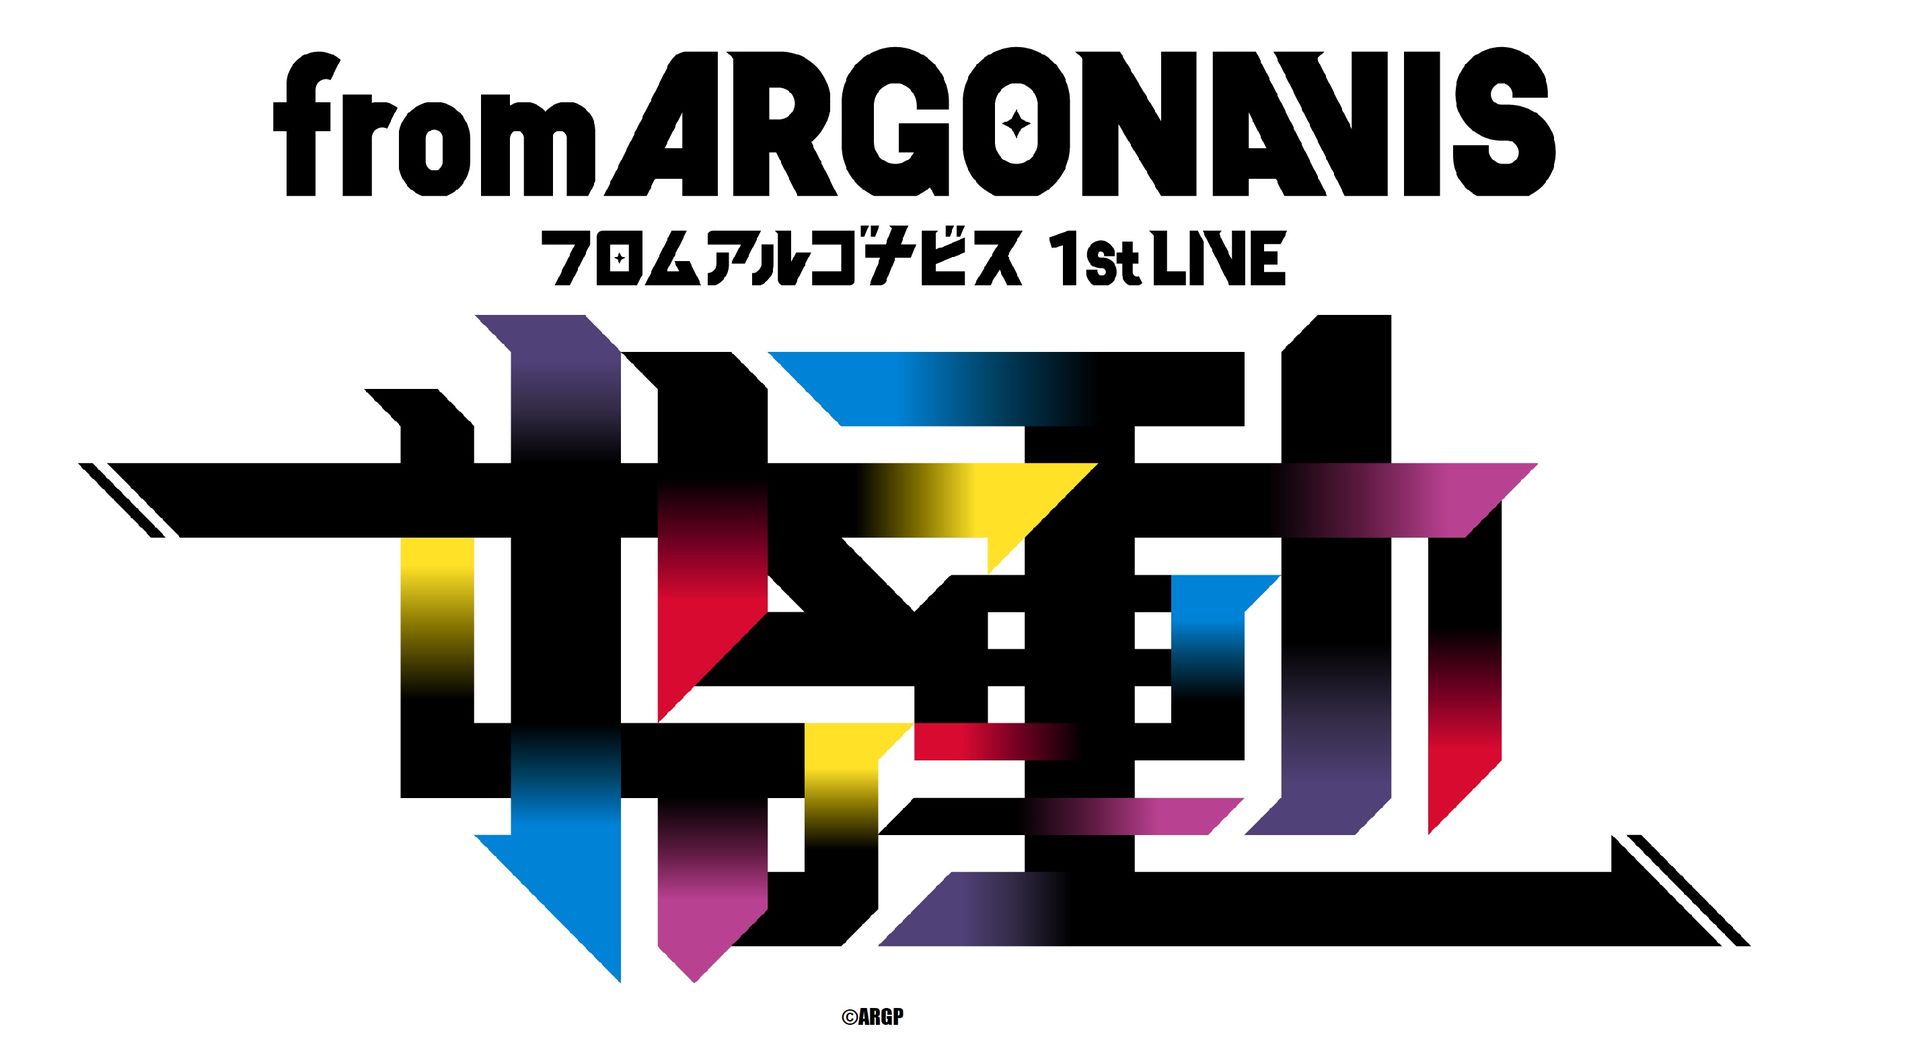 [Streaming+] from ARGONAVIS 1st LIVE ーSHIDOー